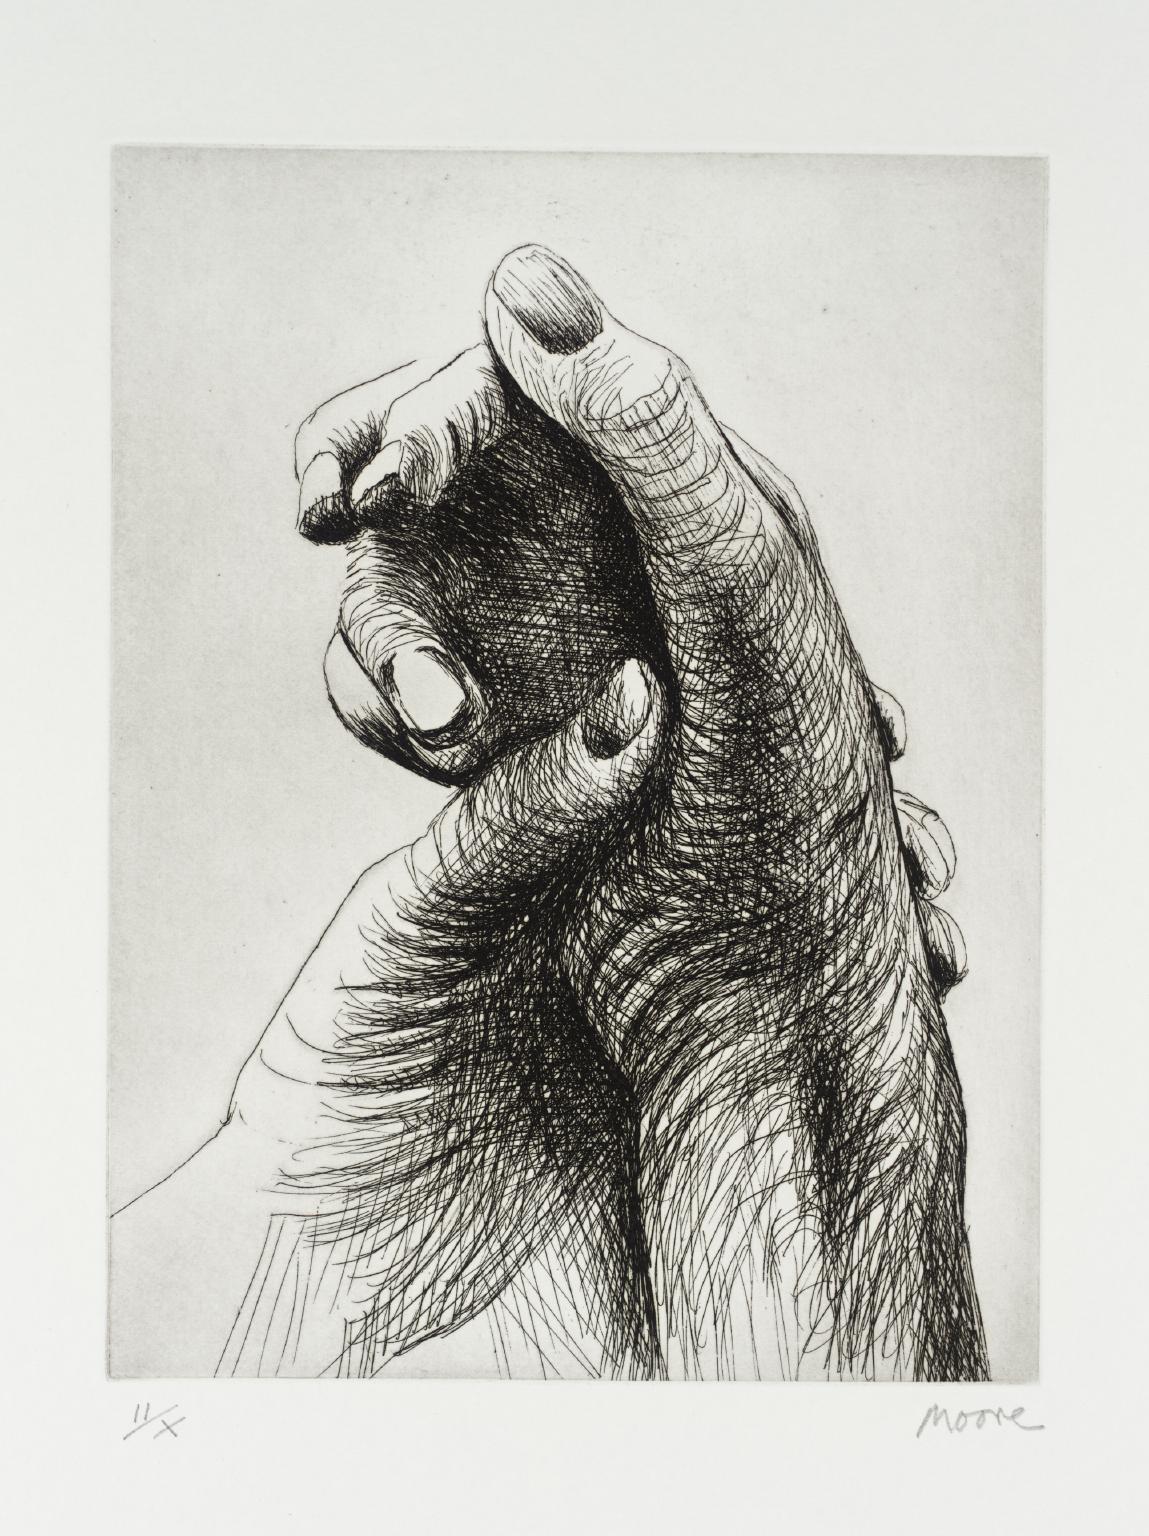 Henry Moore, The Artist’s Hand IV, 1979